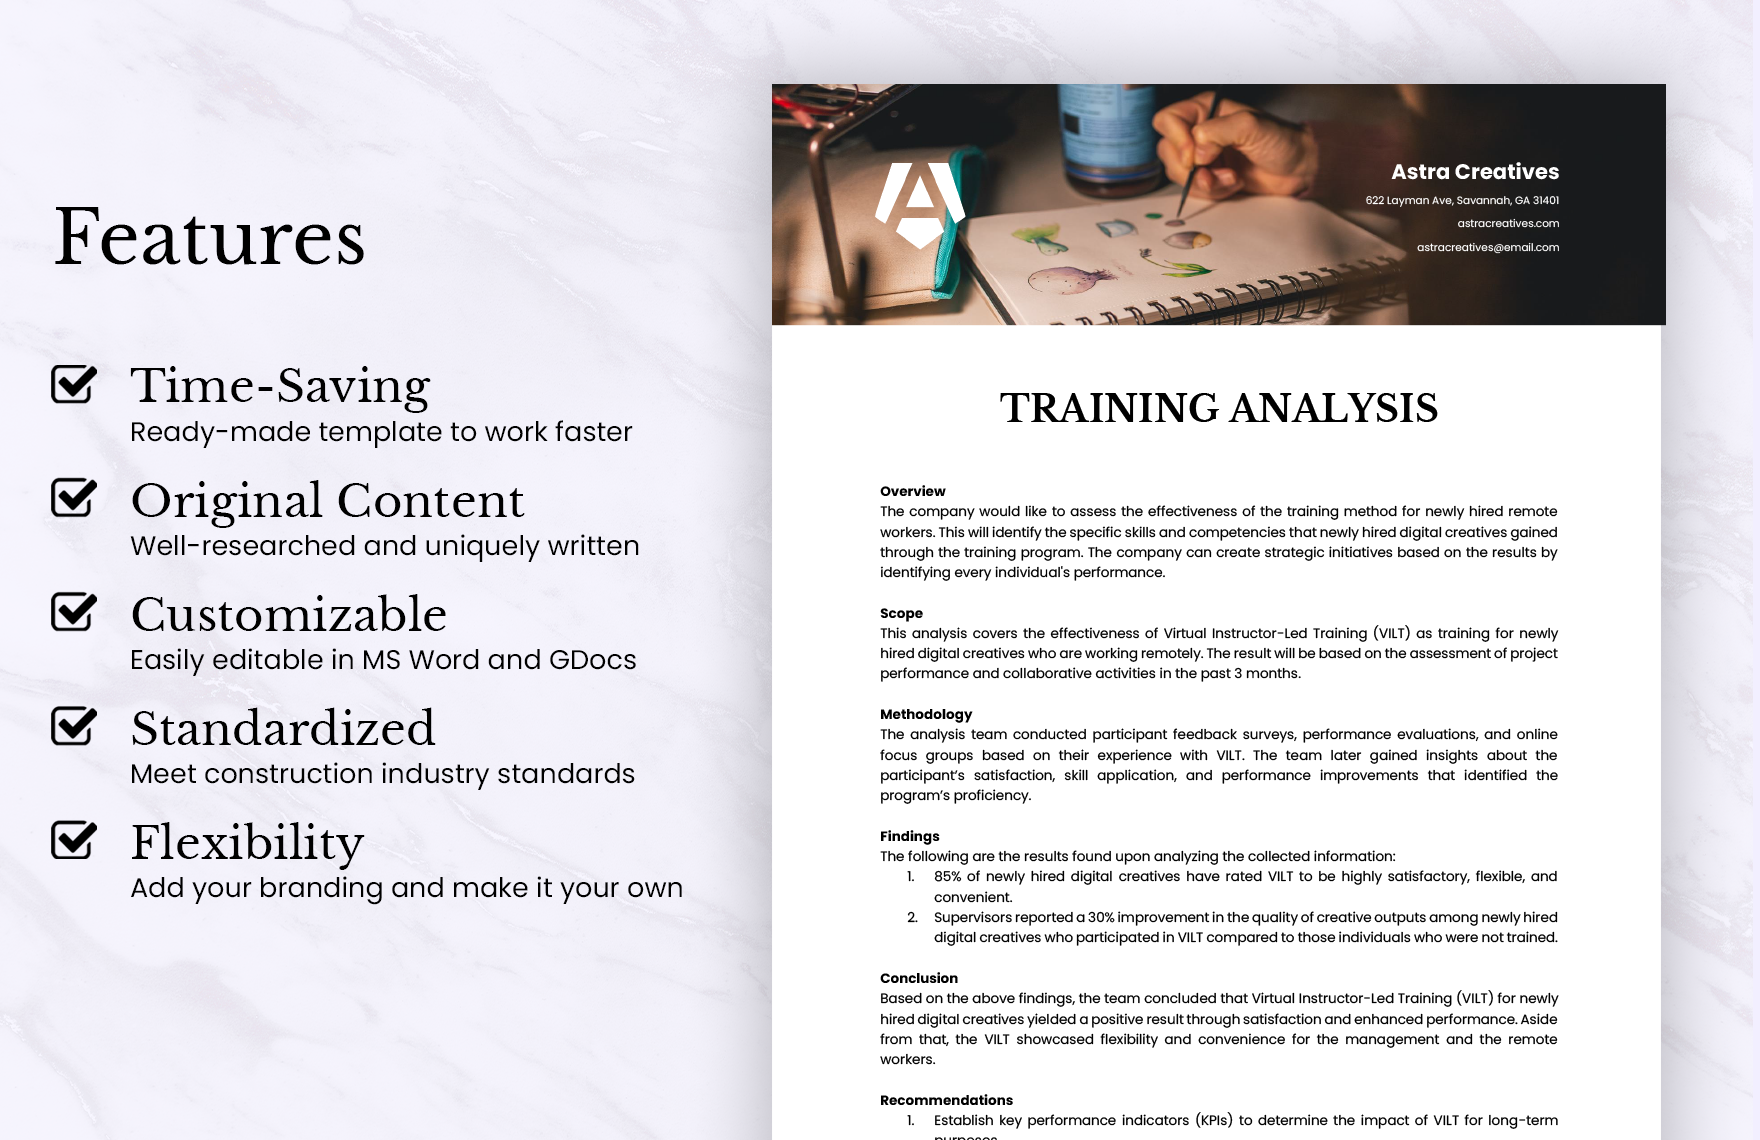 Training Analysis Template